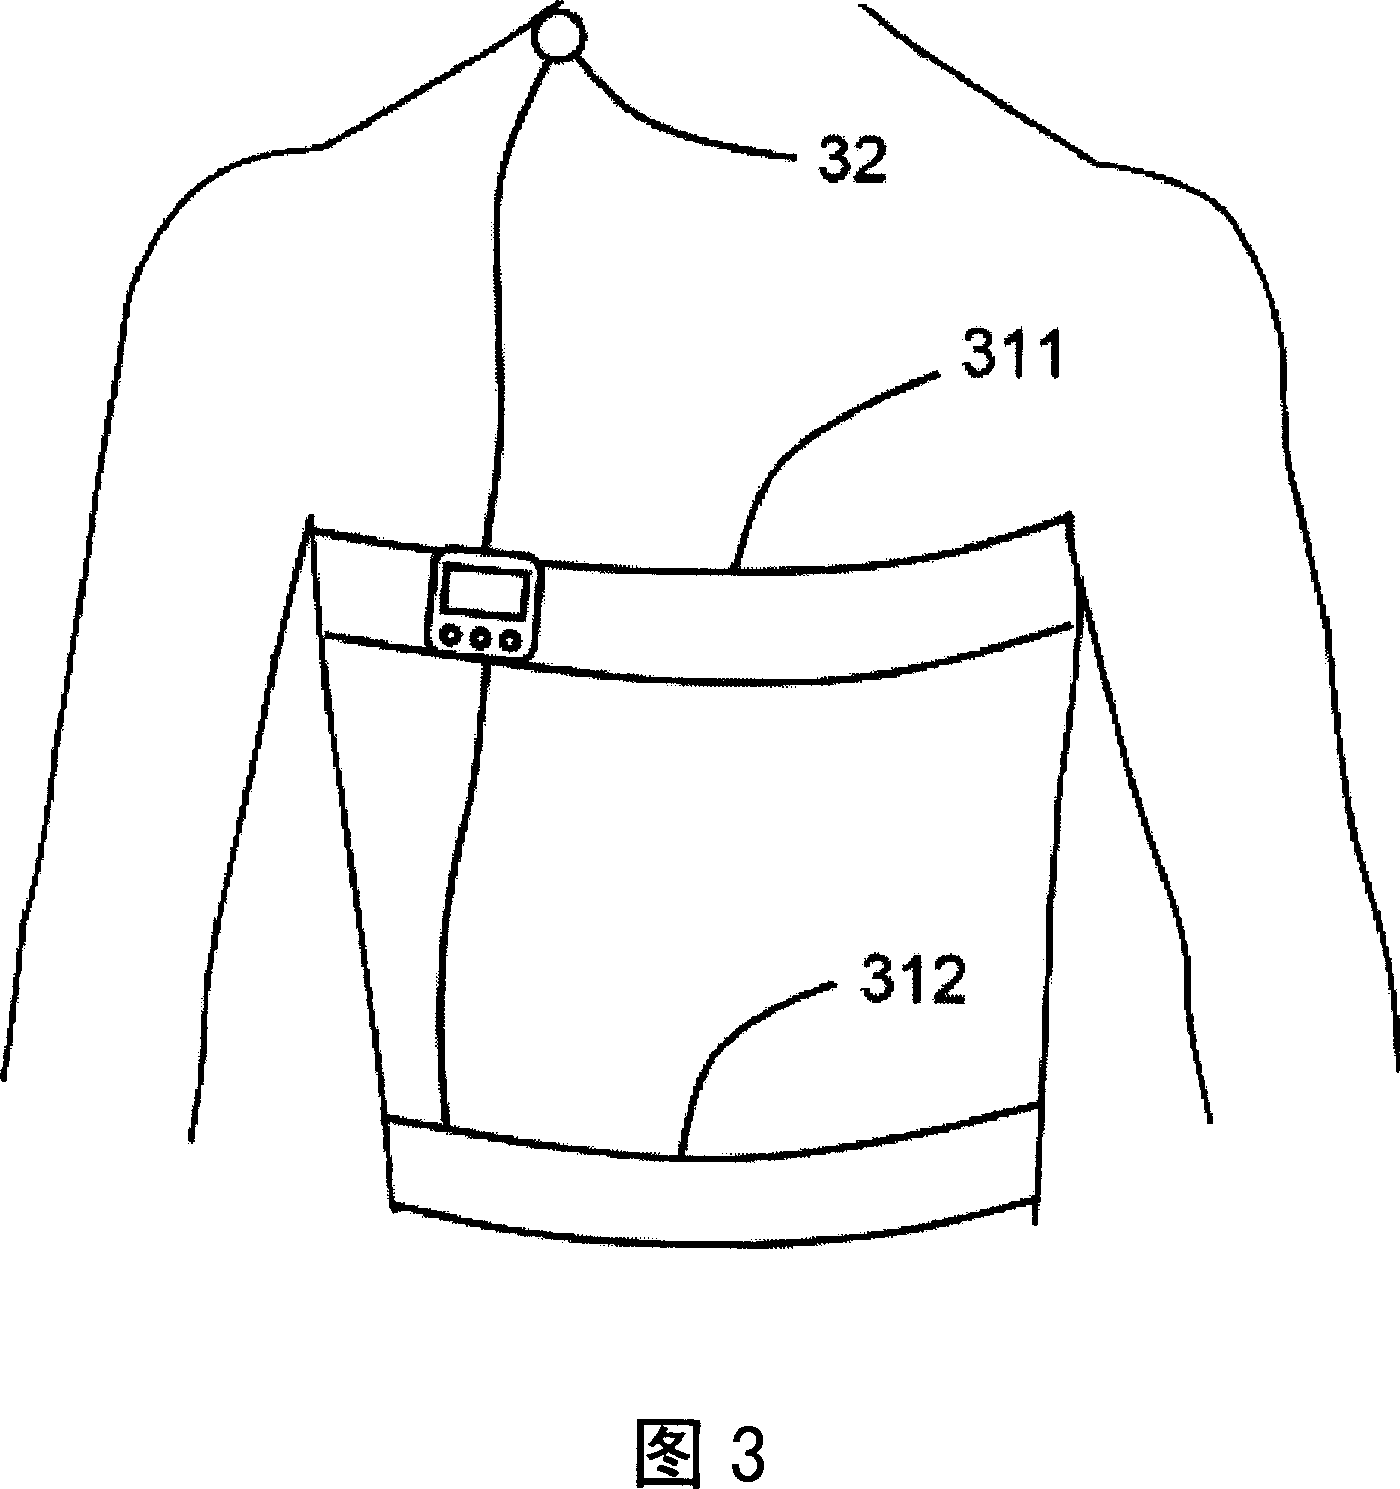 Apparatus for observing sleep breathing status